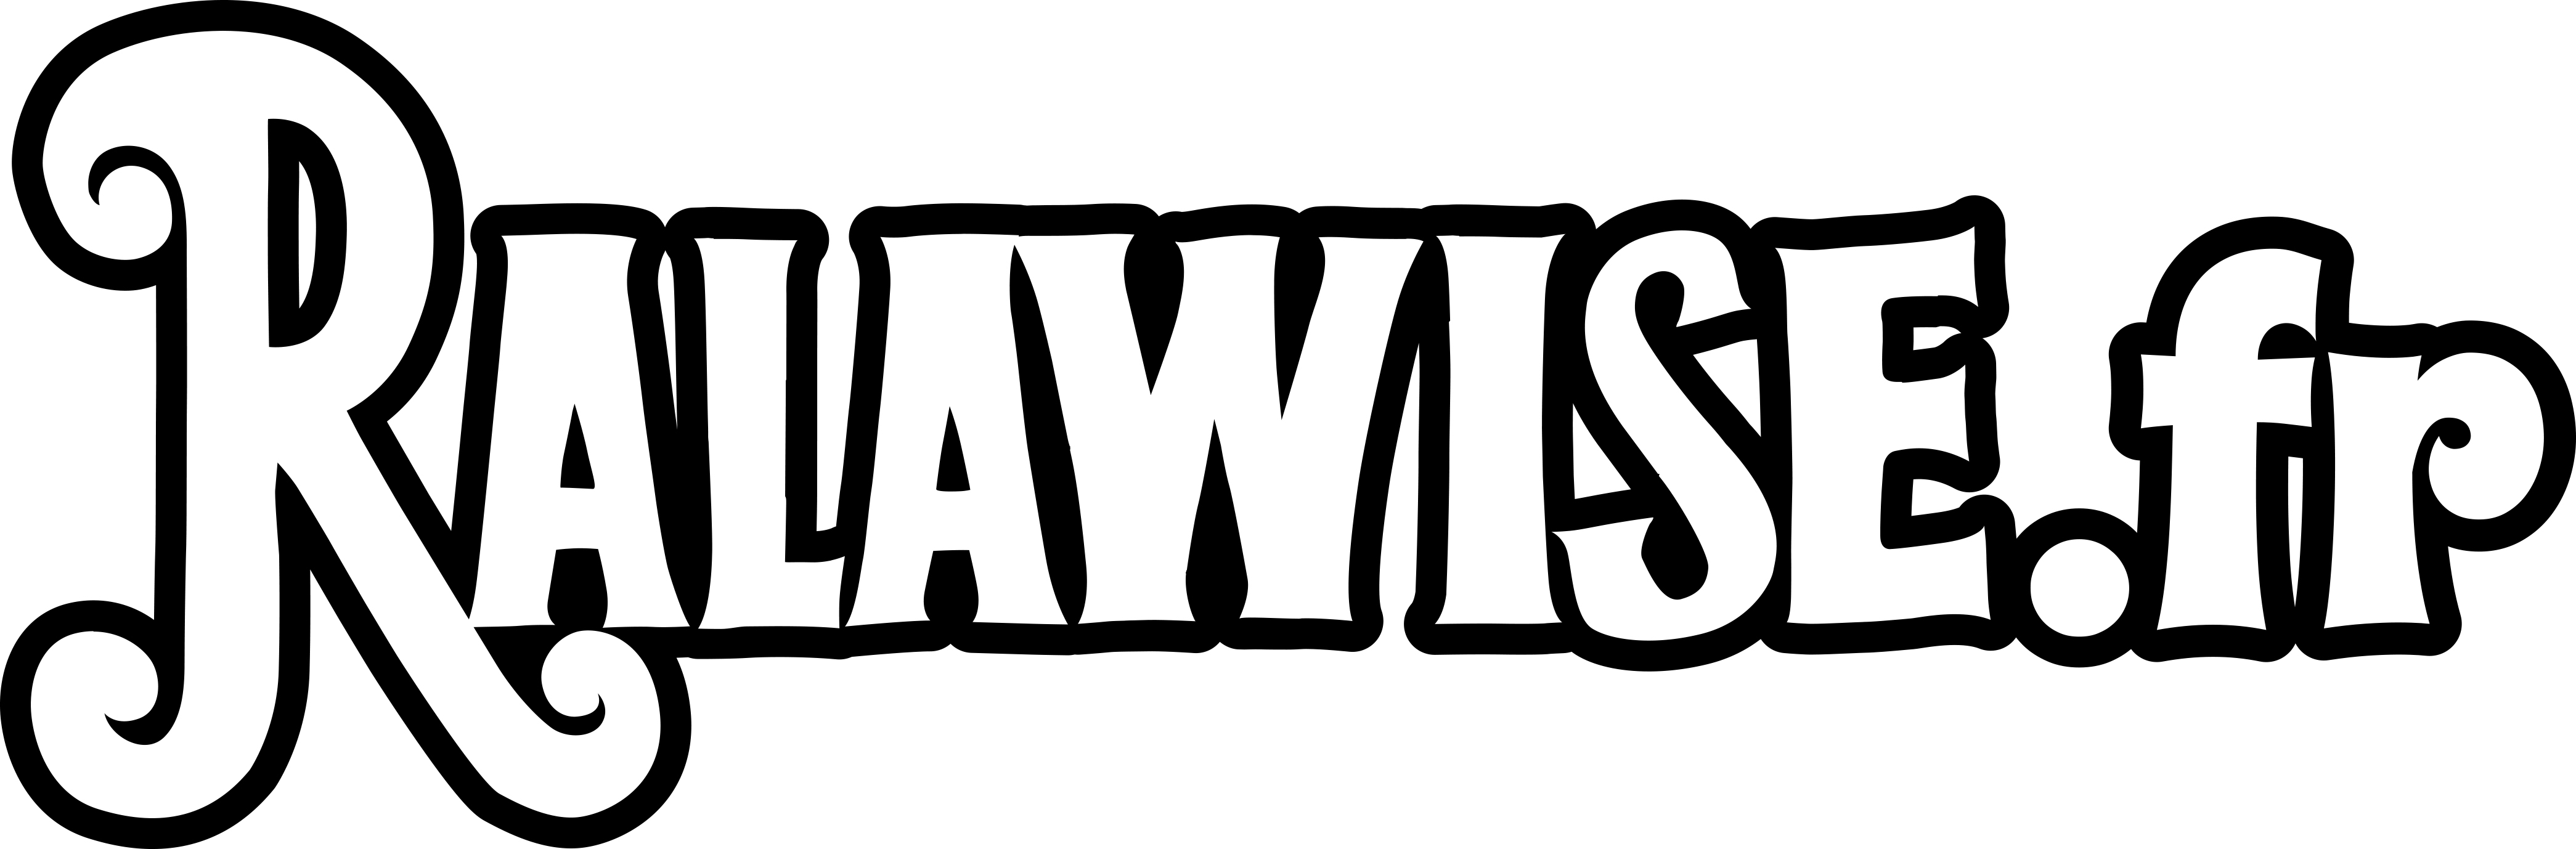 Ralawise-Logo-FR.jpg